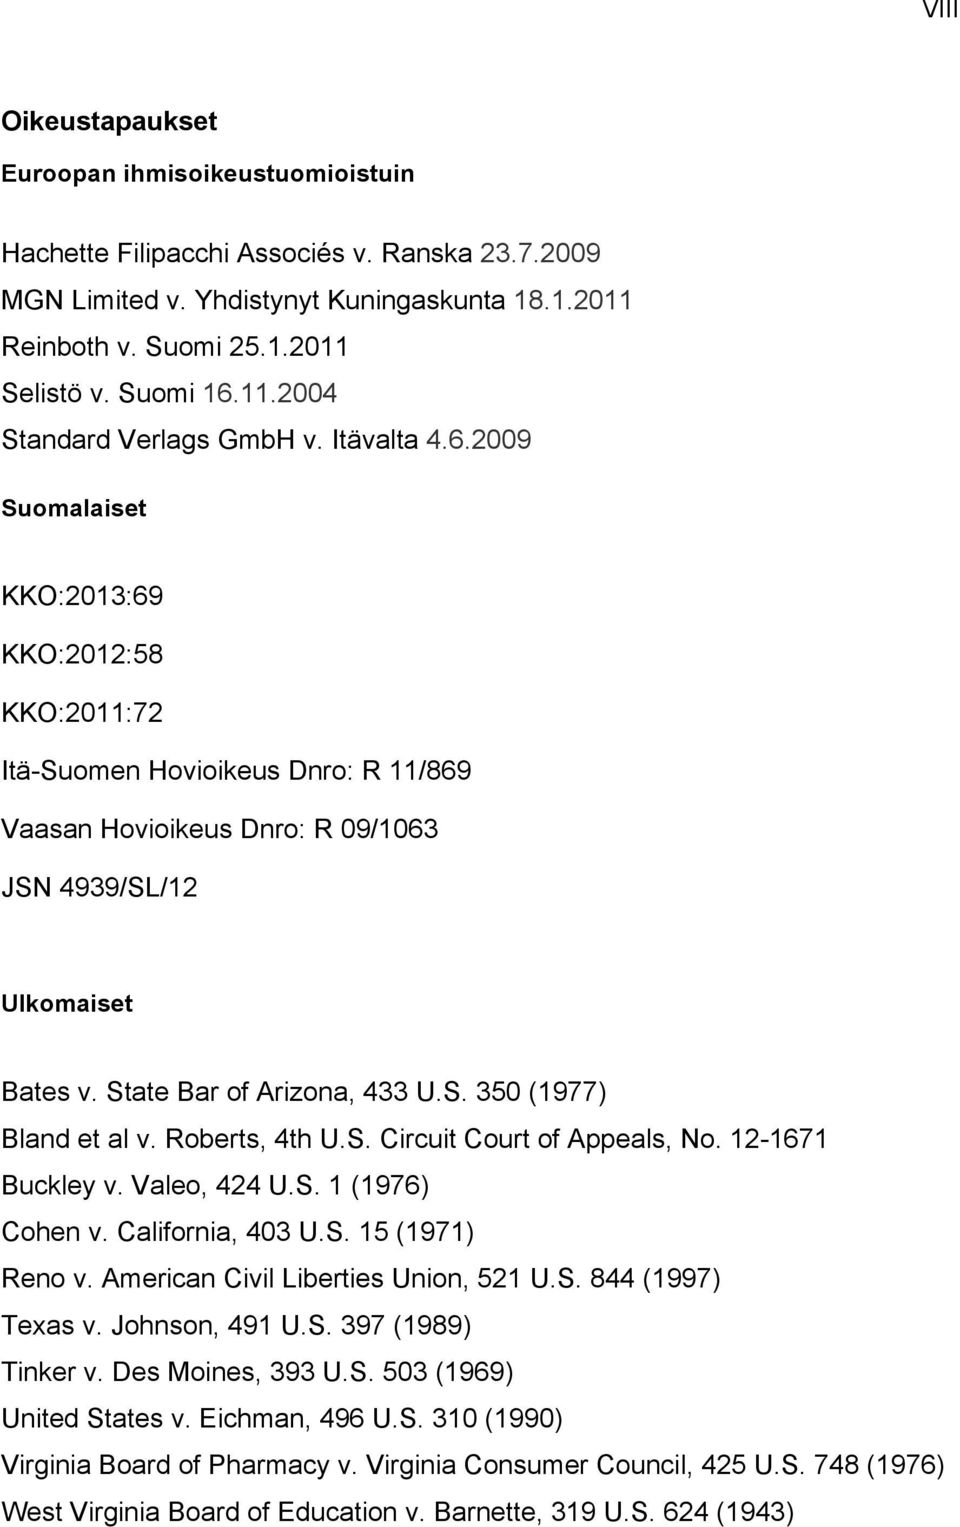 State Bar of Arizona, 433 U.S. 350 (1977) Bland et al v. Roberts, 4th U.S. Circuit Court of Appeals, No. 12-1671 Buckley v. Valeo, 424 U.S. 1 (1976) Cohen v. California, 403 U.S. 15 (1971) Reno v.